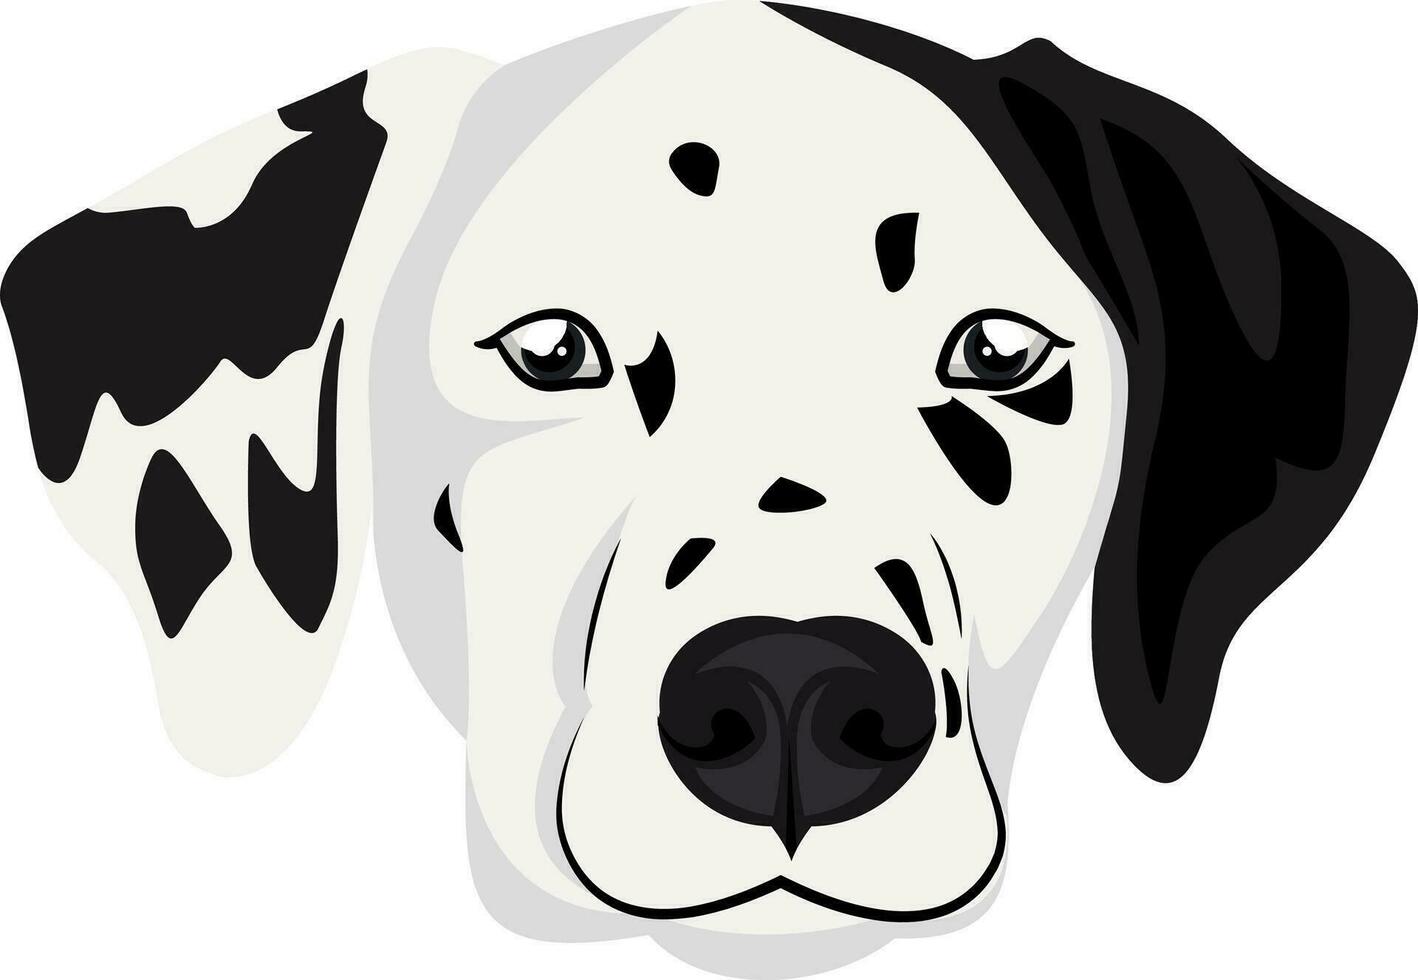 Dalmatian illustration vector on white background